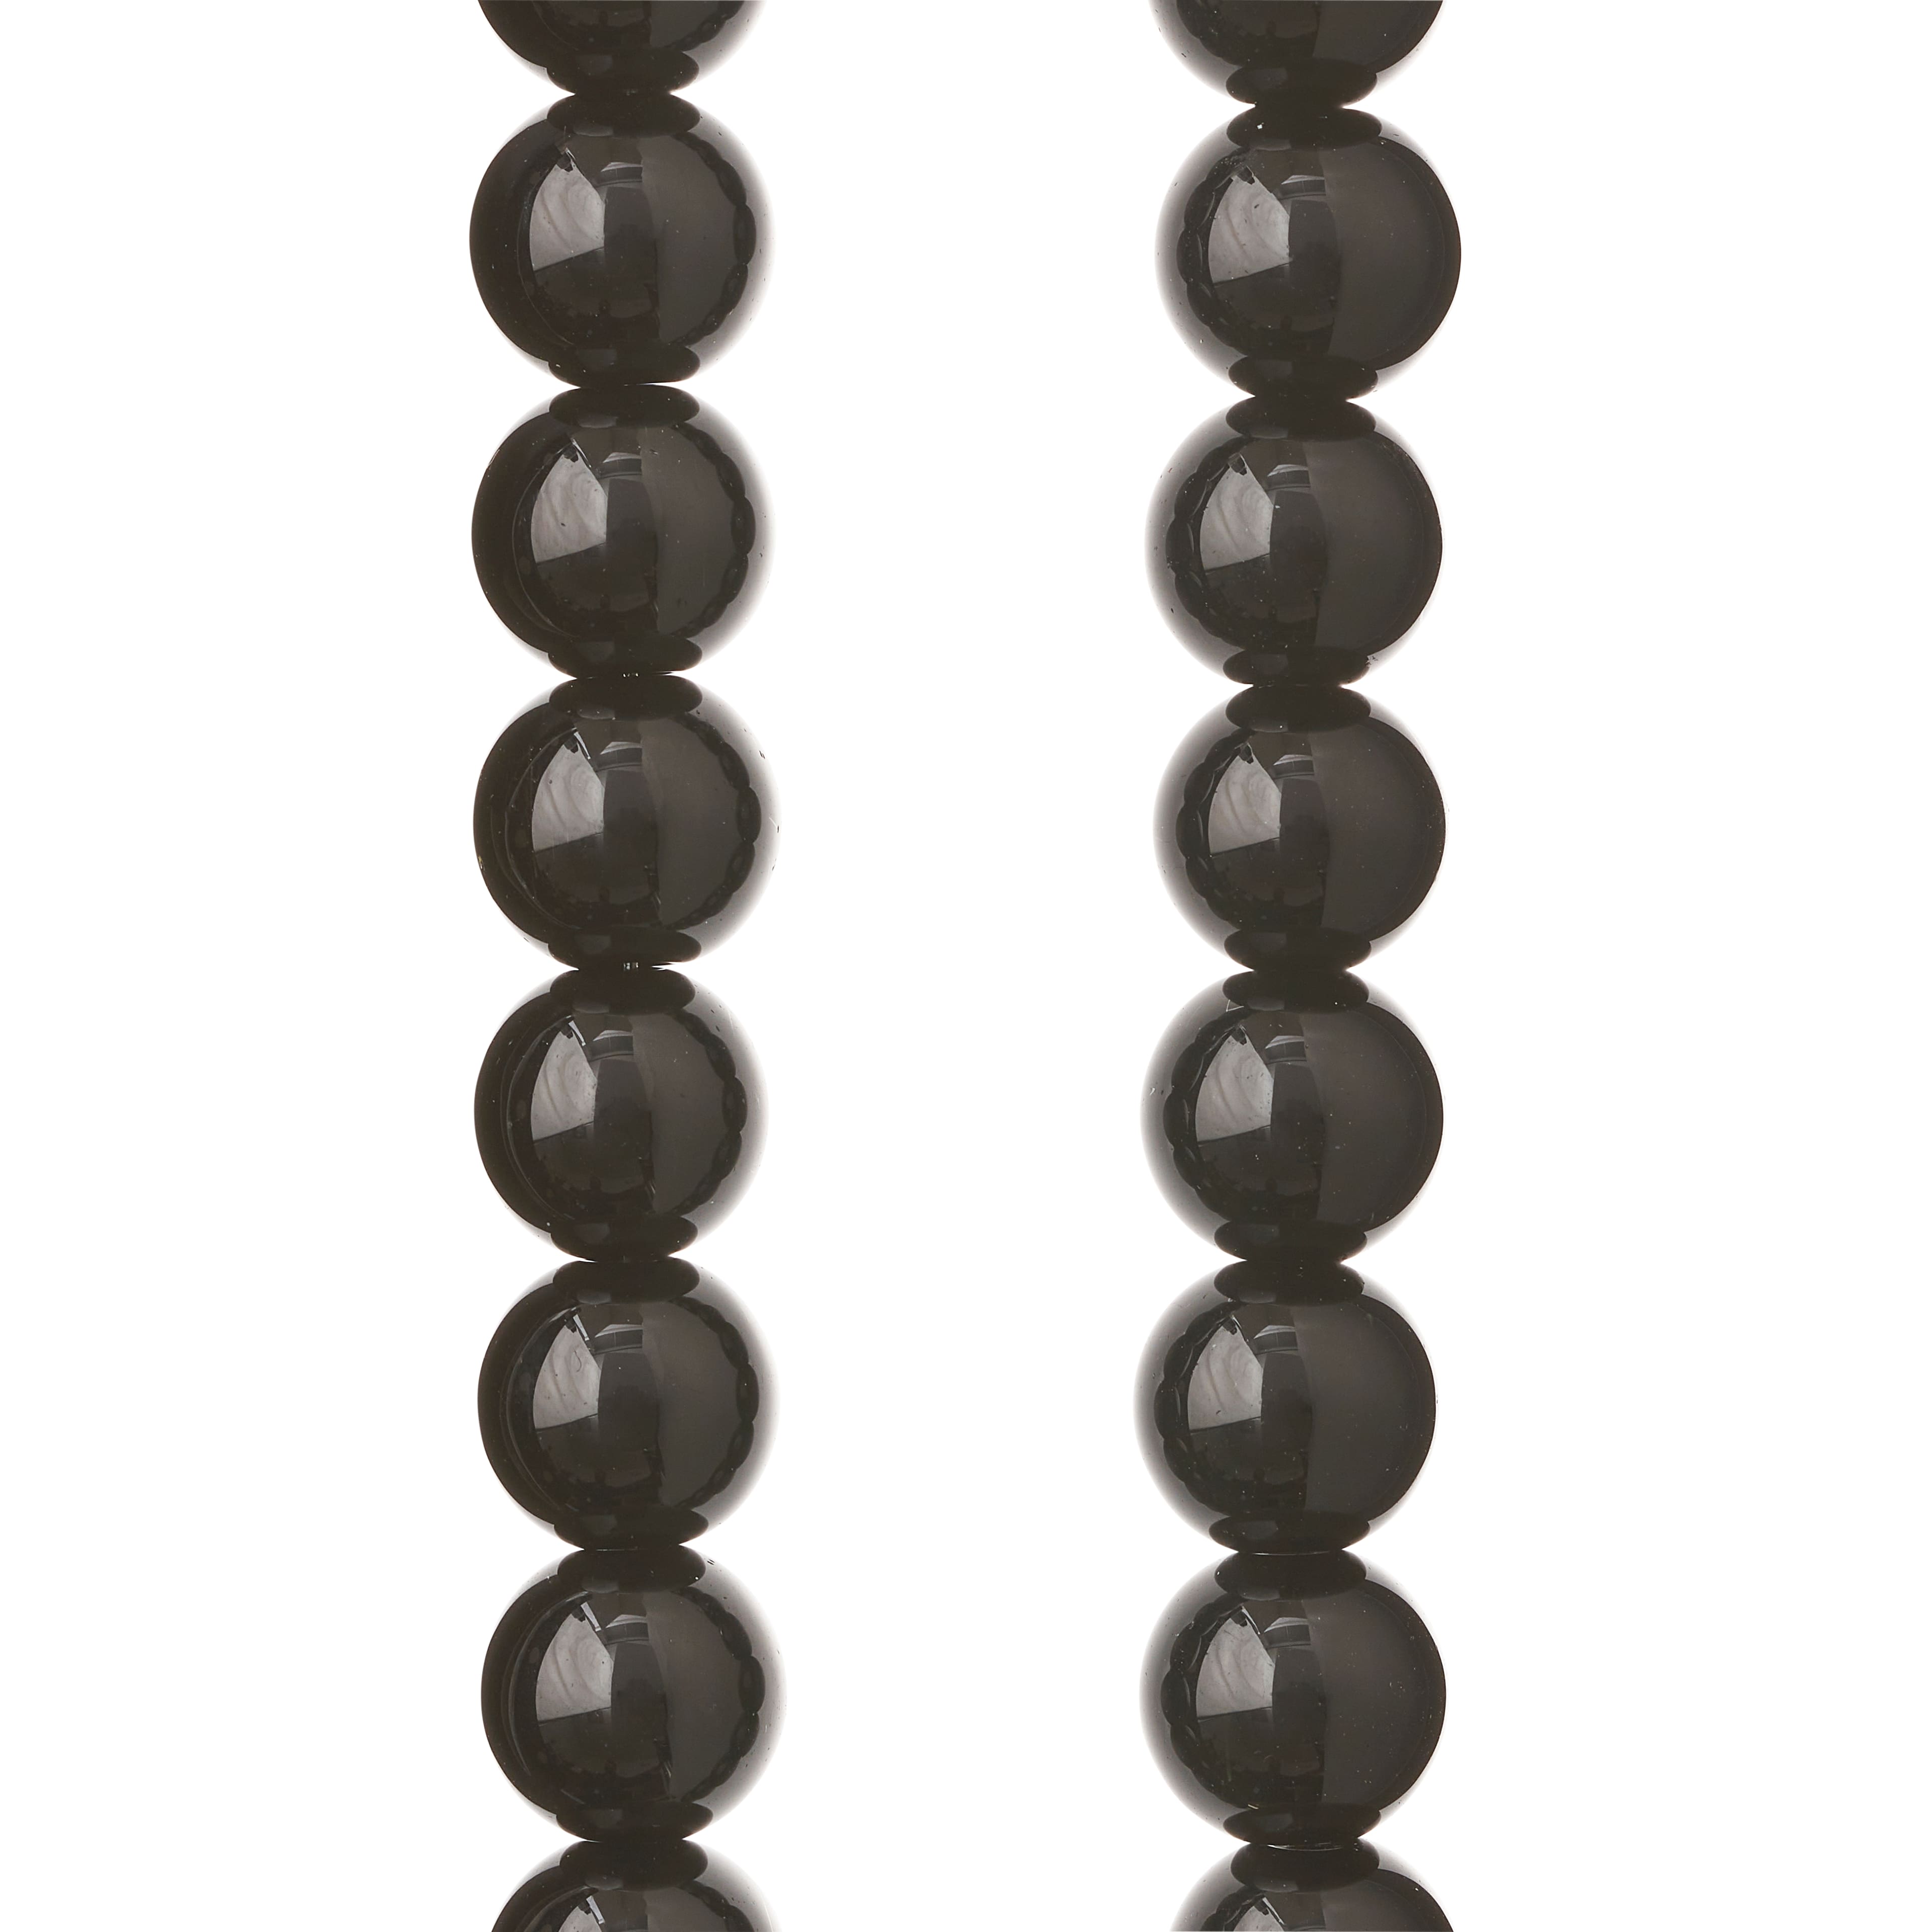 Bead Gallery 10mm Black & White Eye-Dot Glass Round Beads - Each